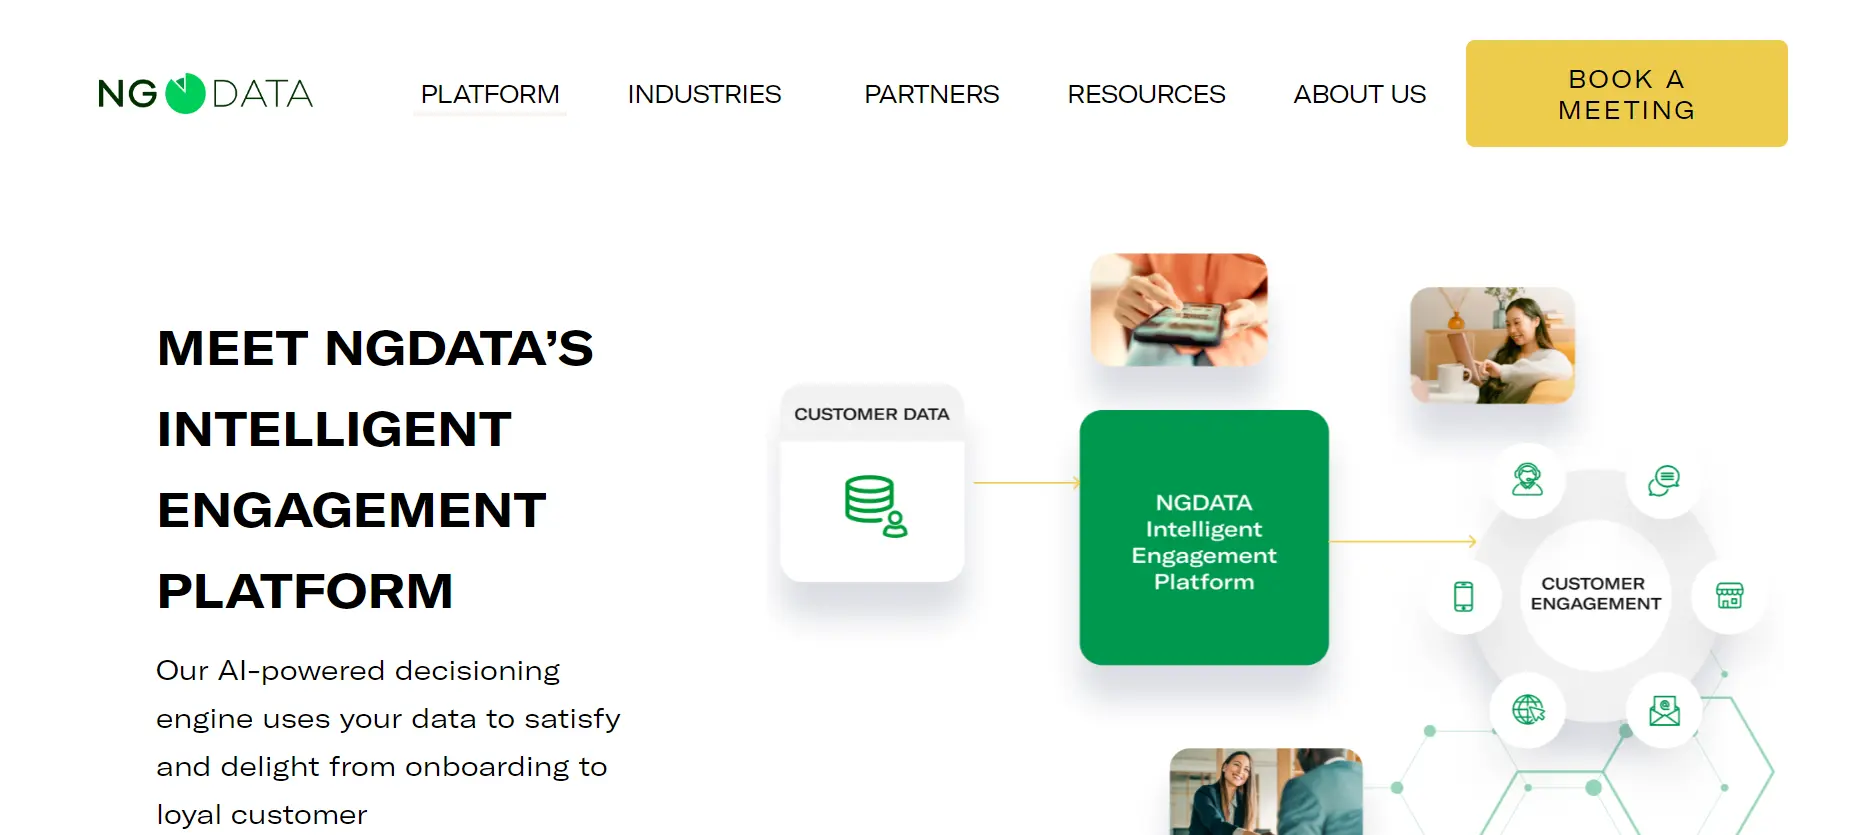 NGDATA's AI-Powered Intelligent Engagement Platform